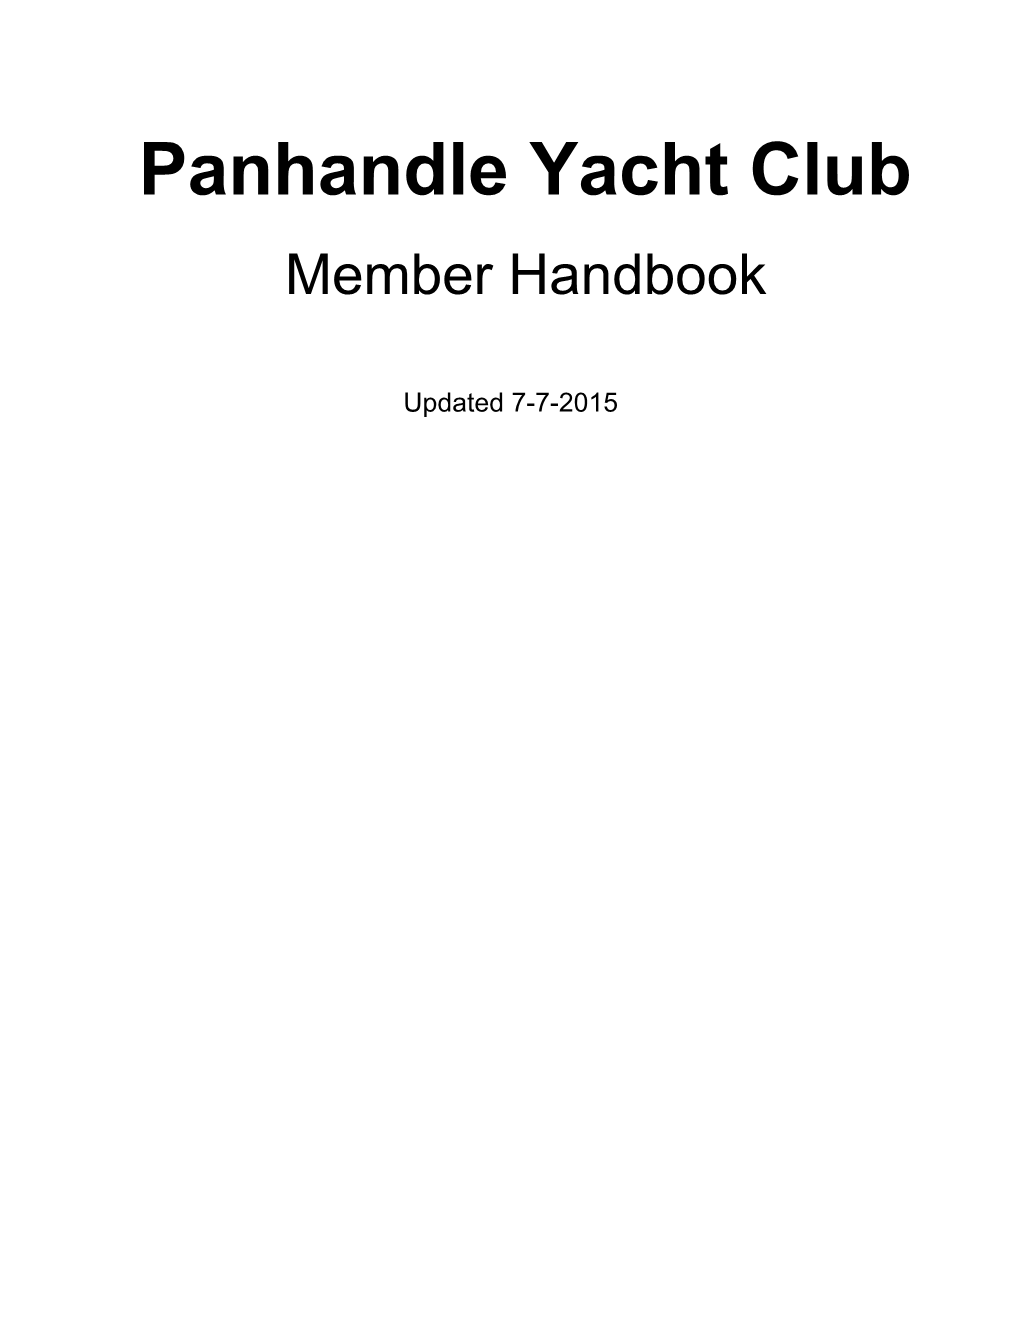 Panhandle Yacht Club Member Handbook